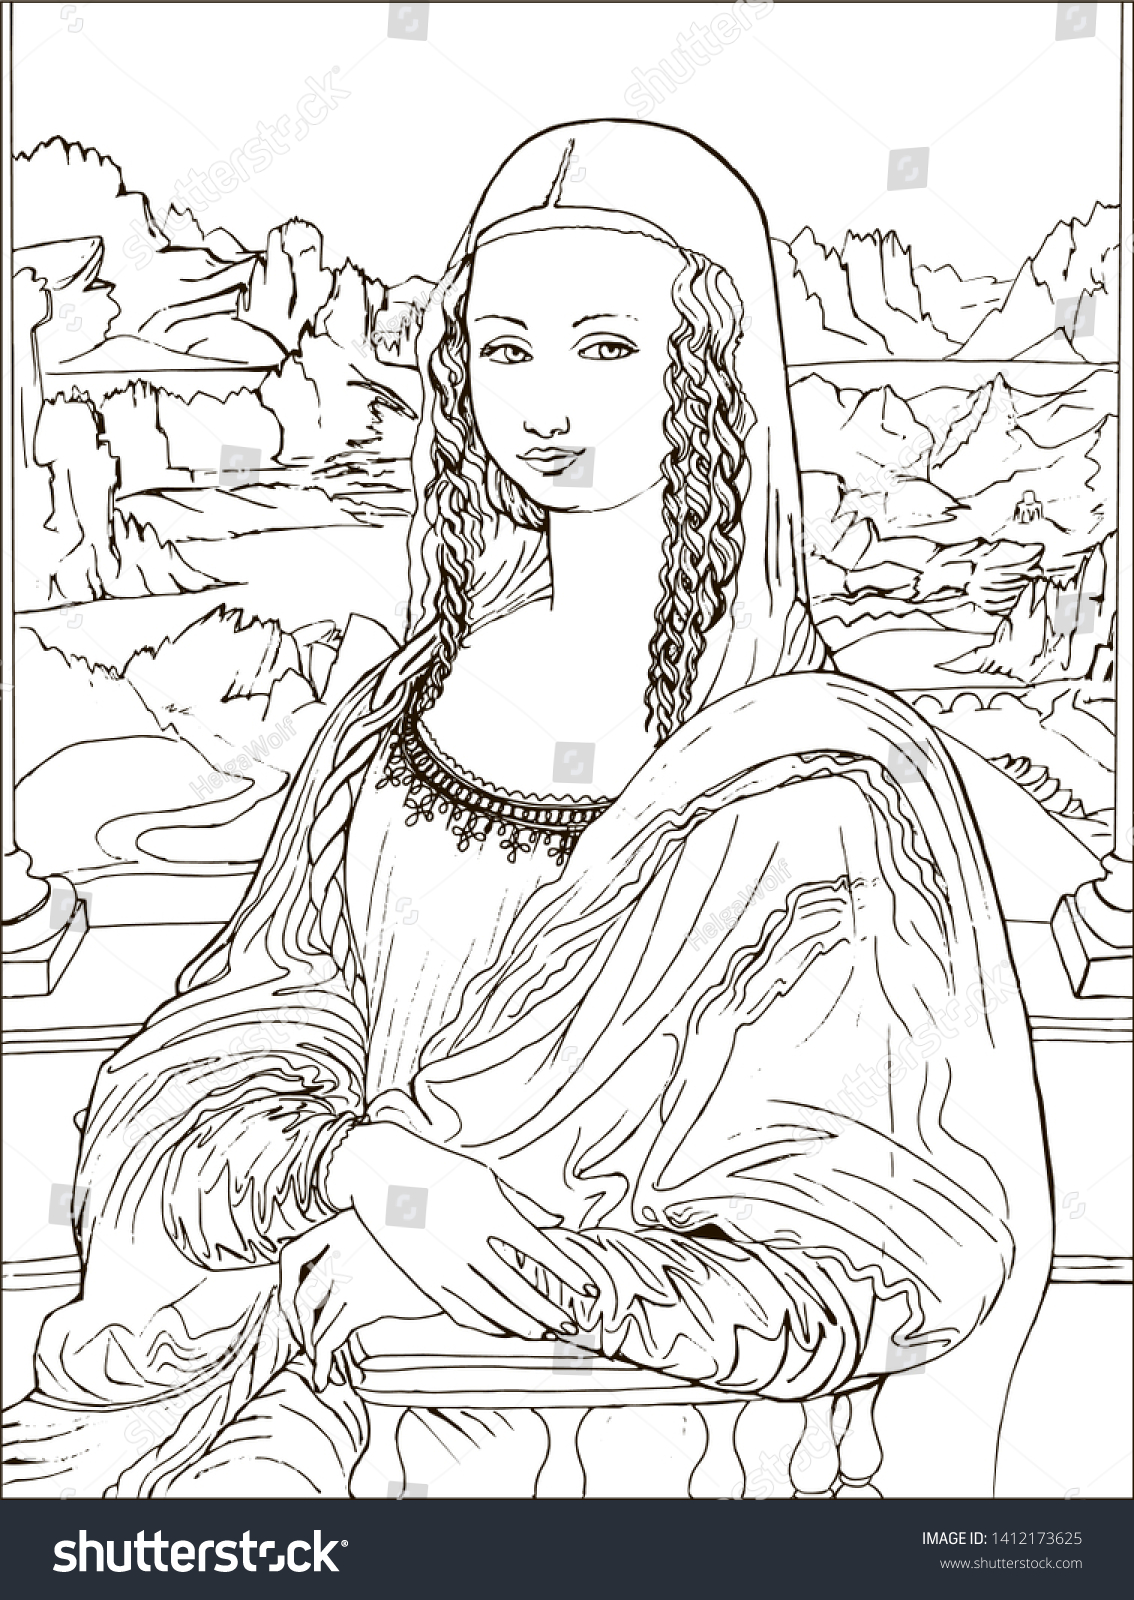 Coloring Page Mona Lisa Based On: стоковая иллюстрация, 1412173625 Shutters...